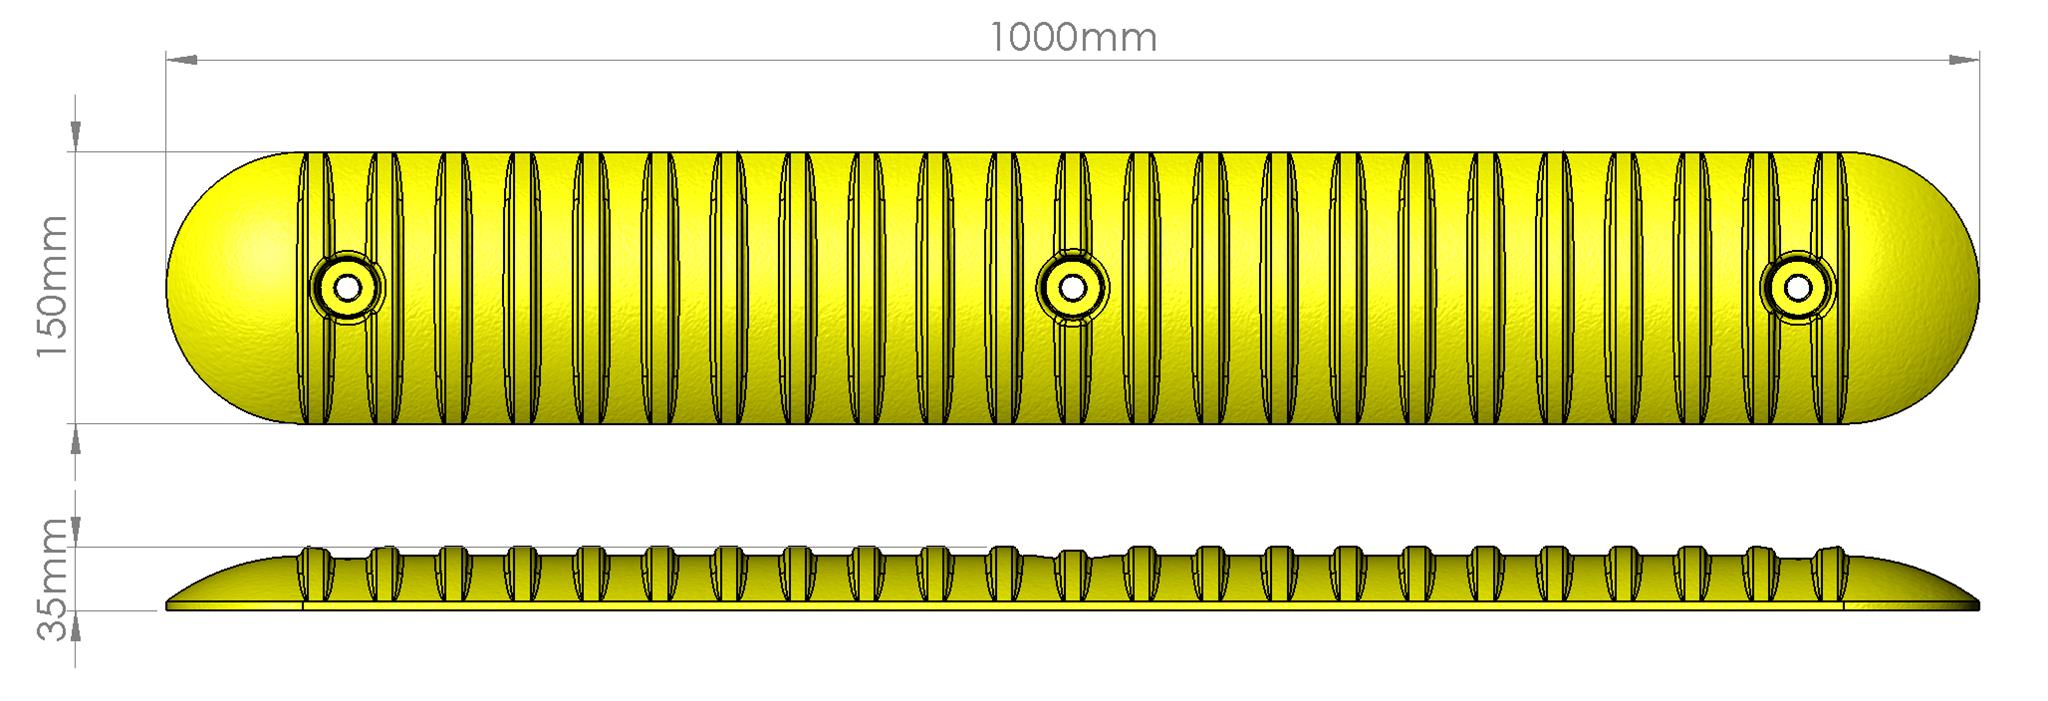 Caterpillar Safe Cycle technical drawing